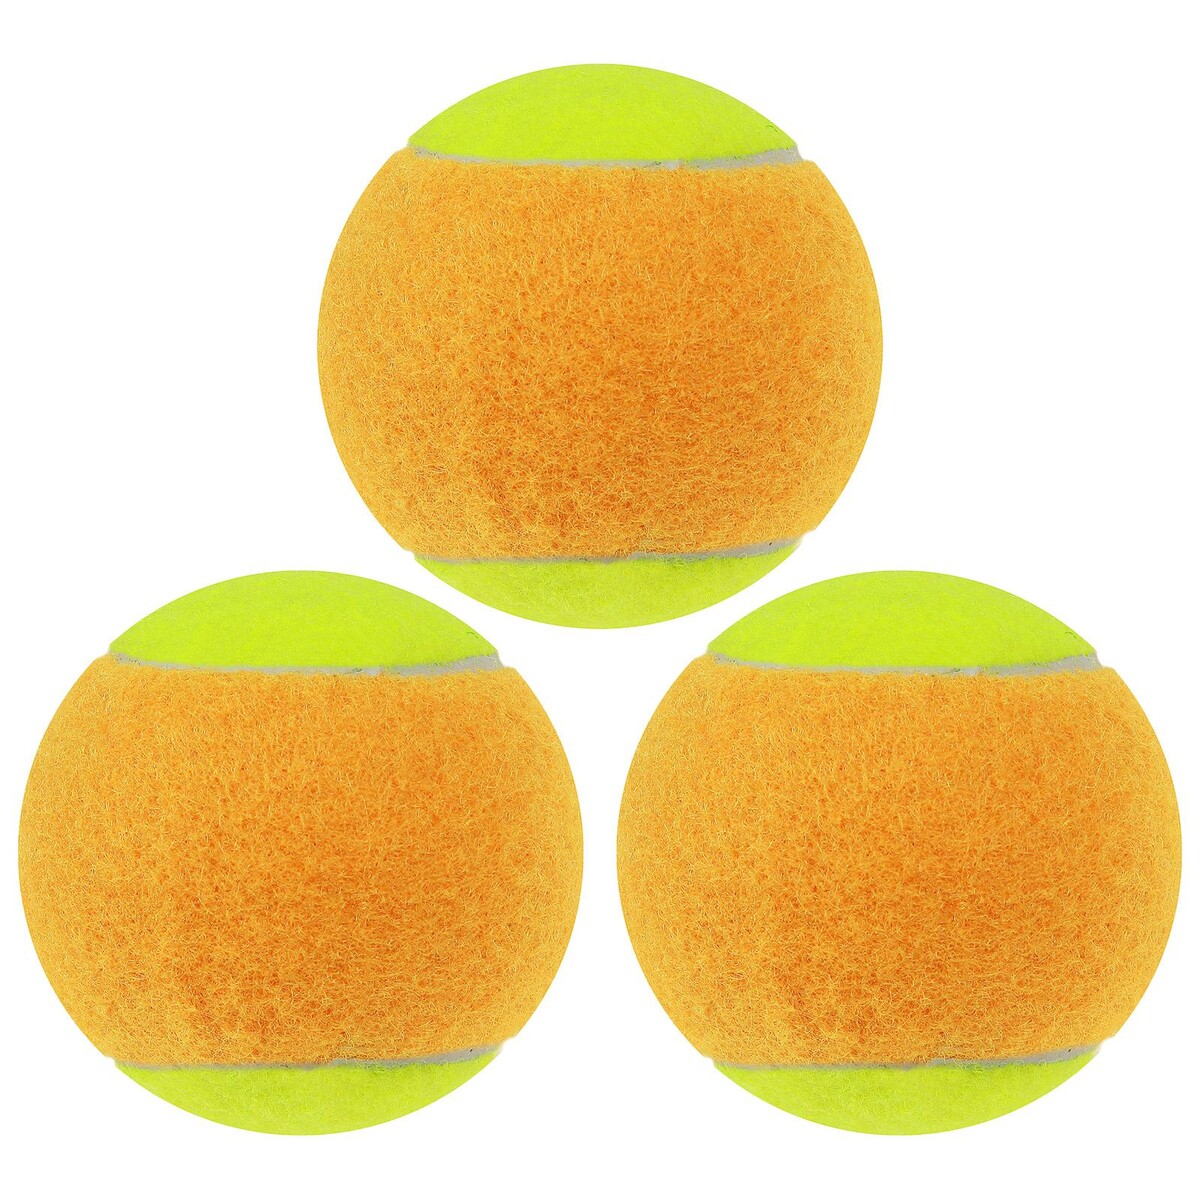 Набор мячей для большого тенниса onlytop swidon, 3 шт. набор мячей для настольного тенниса onlytop d 40 мм 12 шт оранжевый